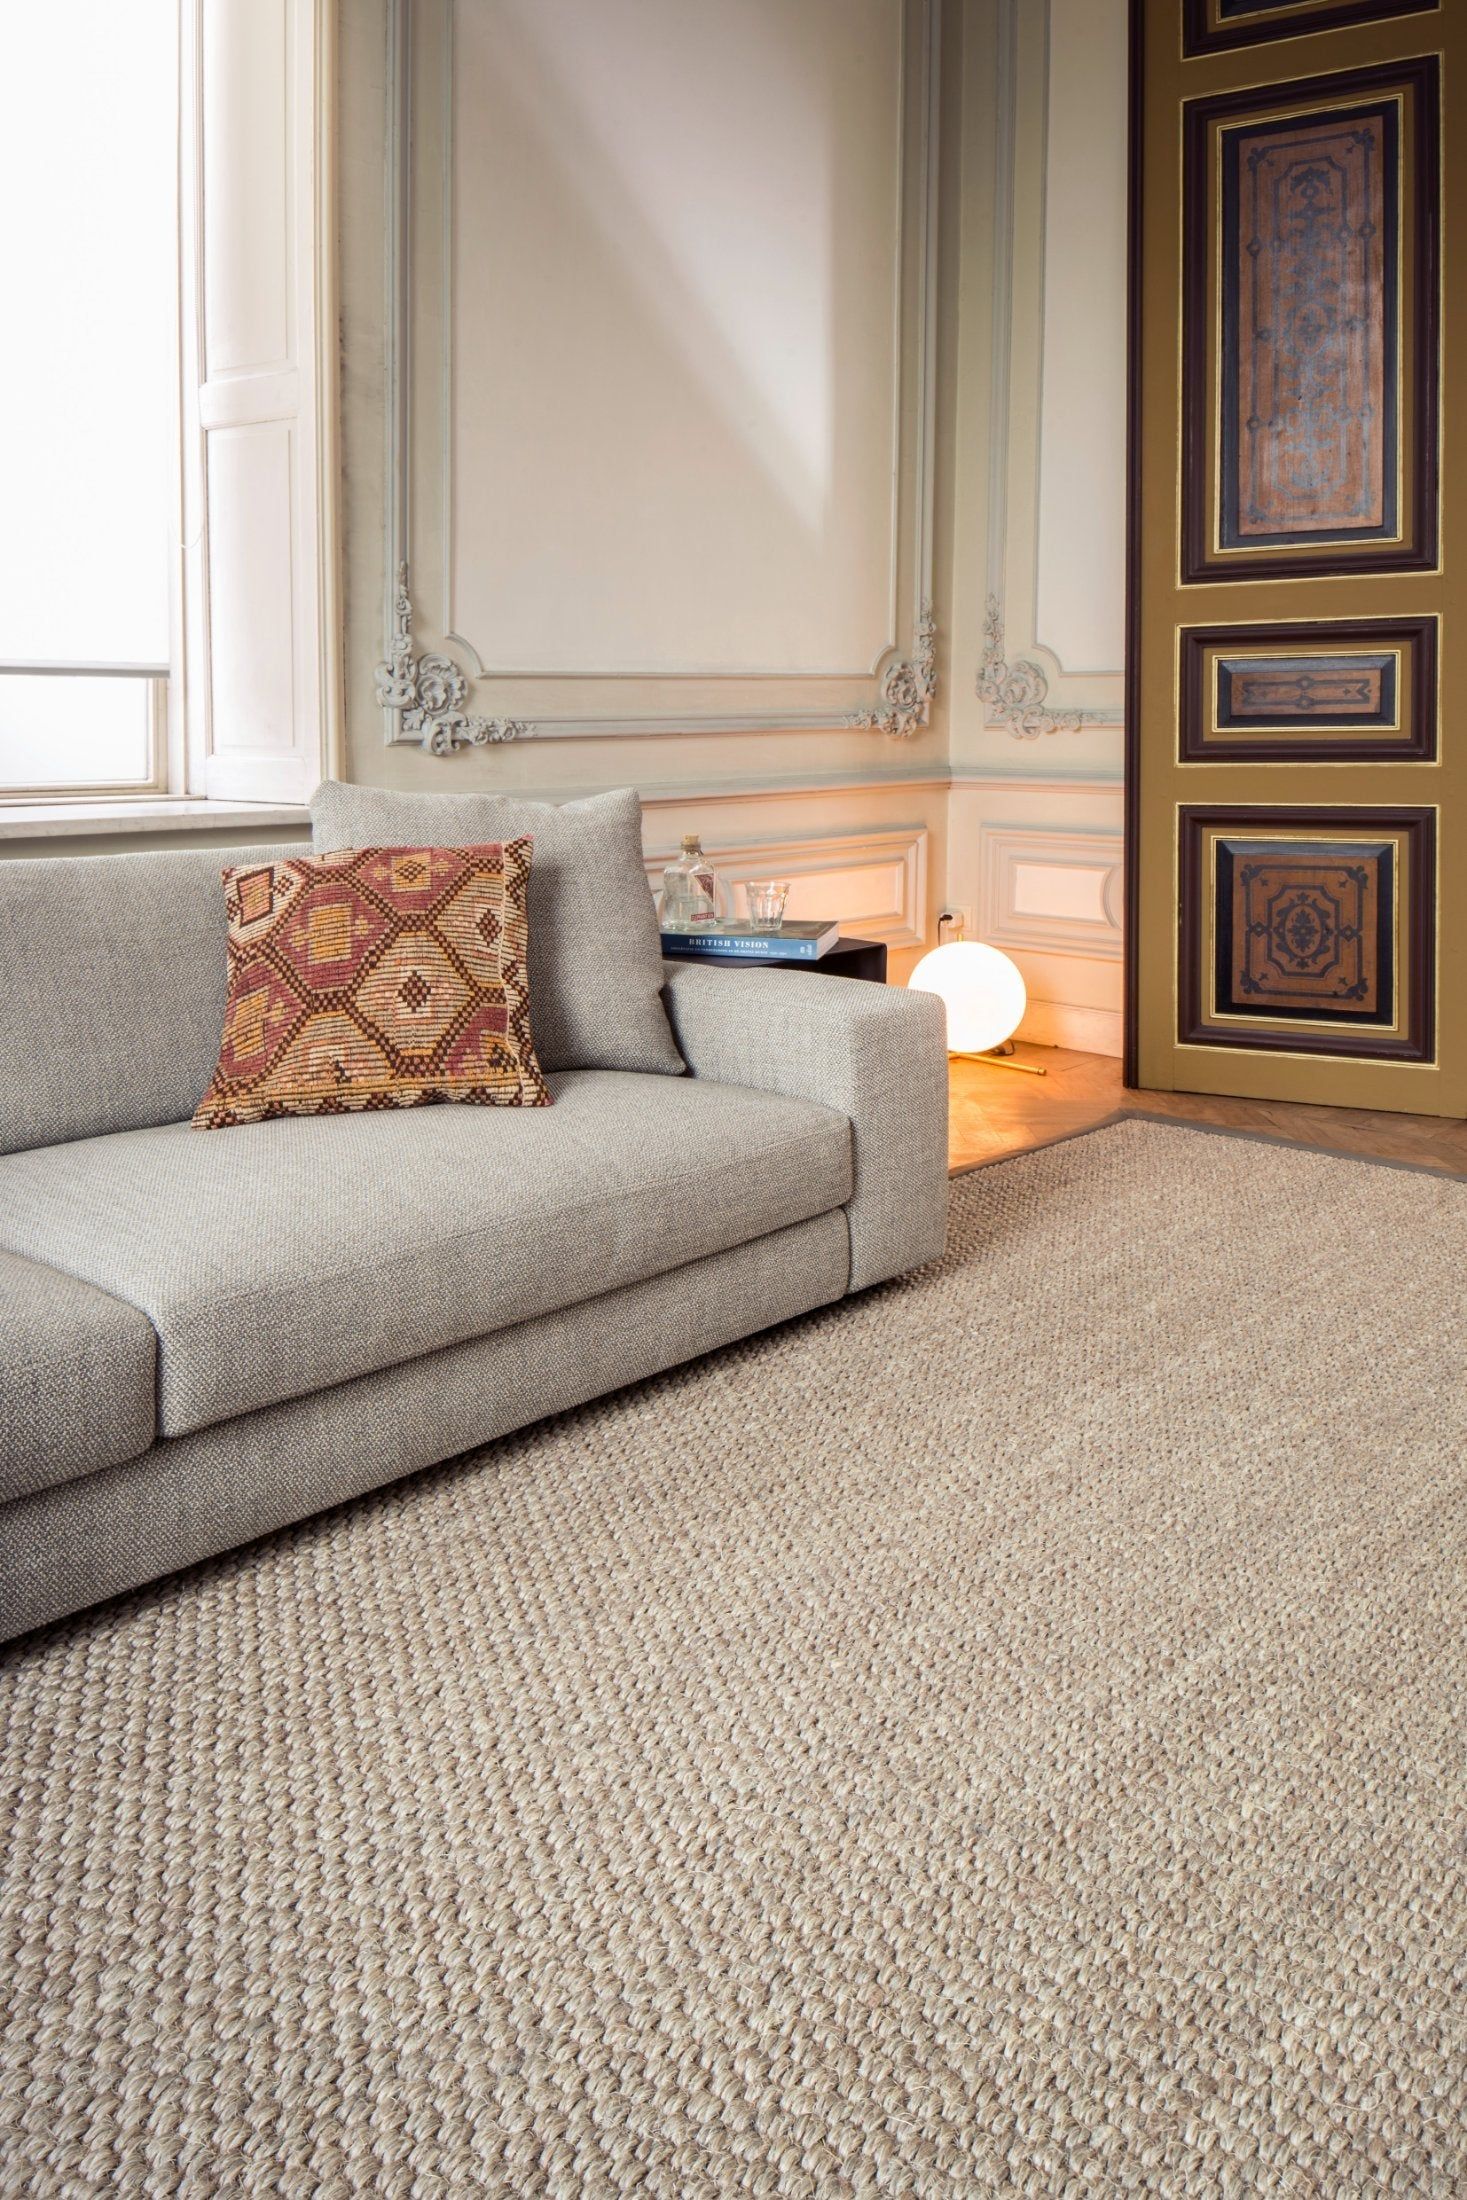 Benefits of using sisal rugs